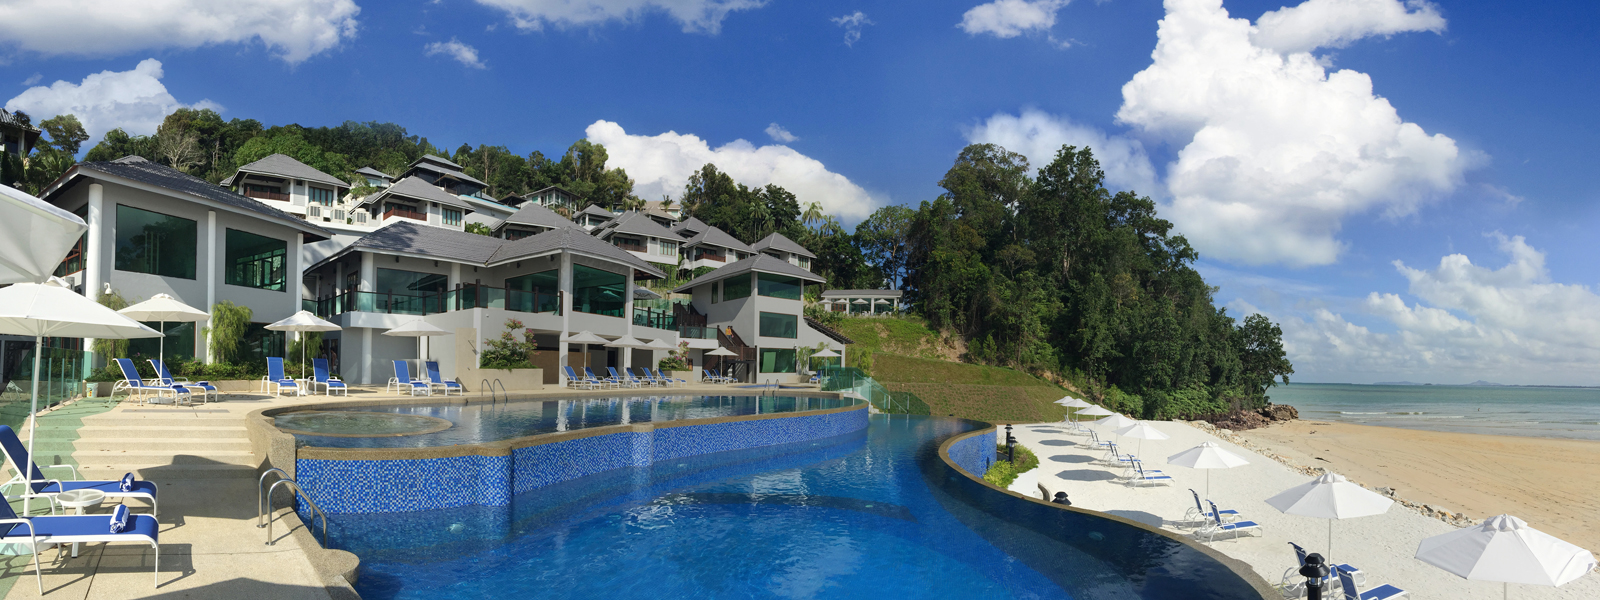 Pool cherating private villa with Holiday Villa